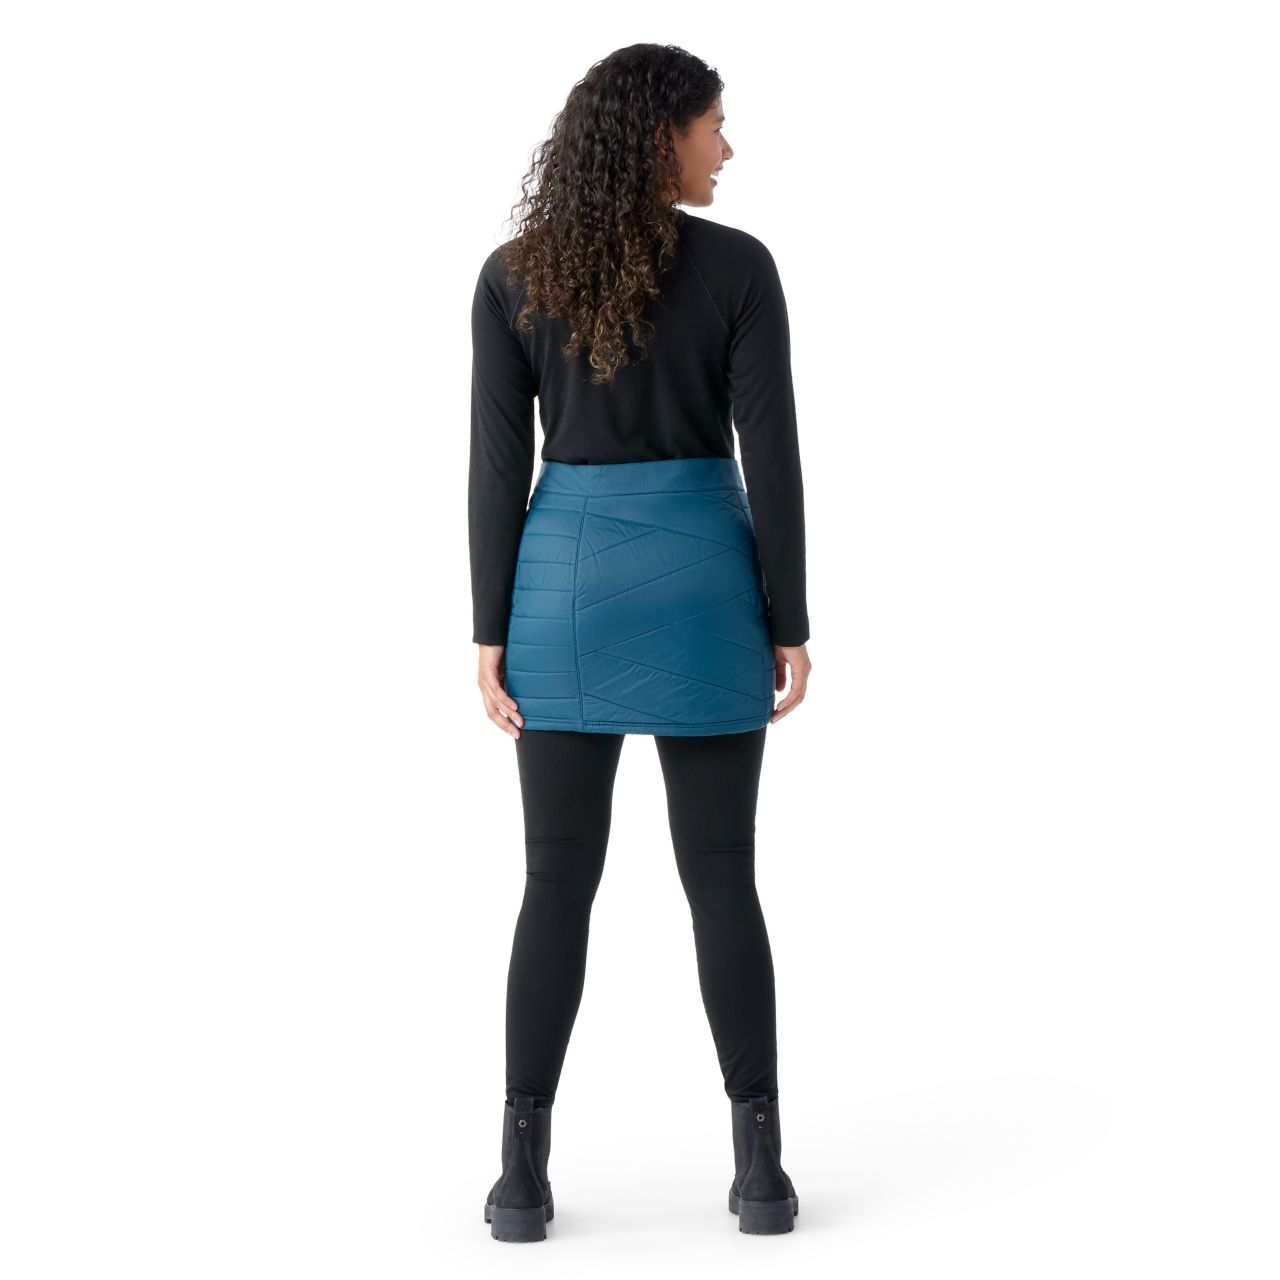 Smartwool Smartloft Zip Skirt - Women's